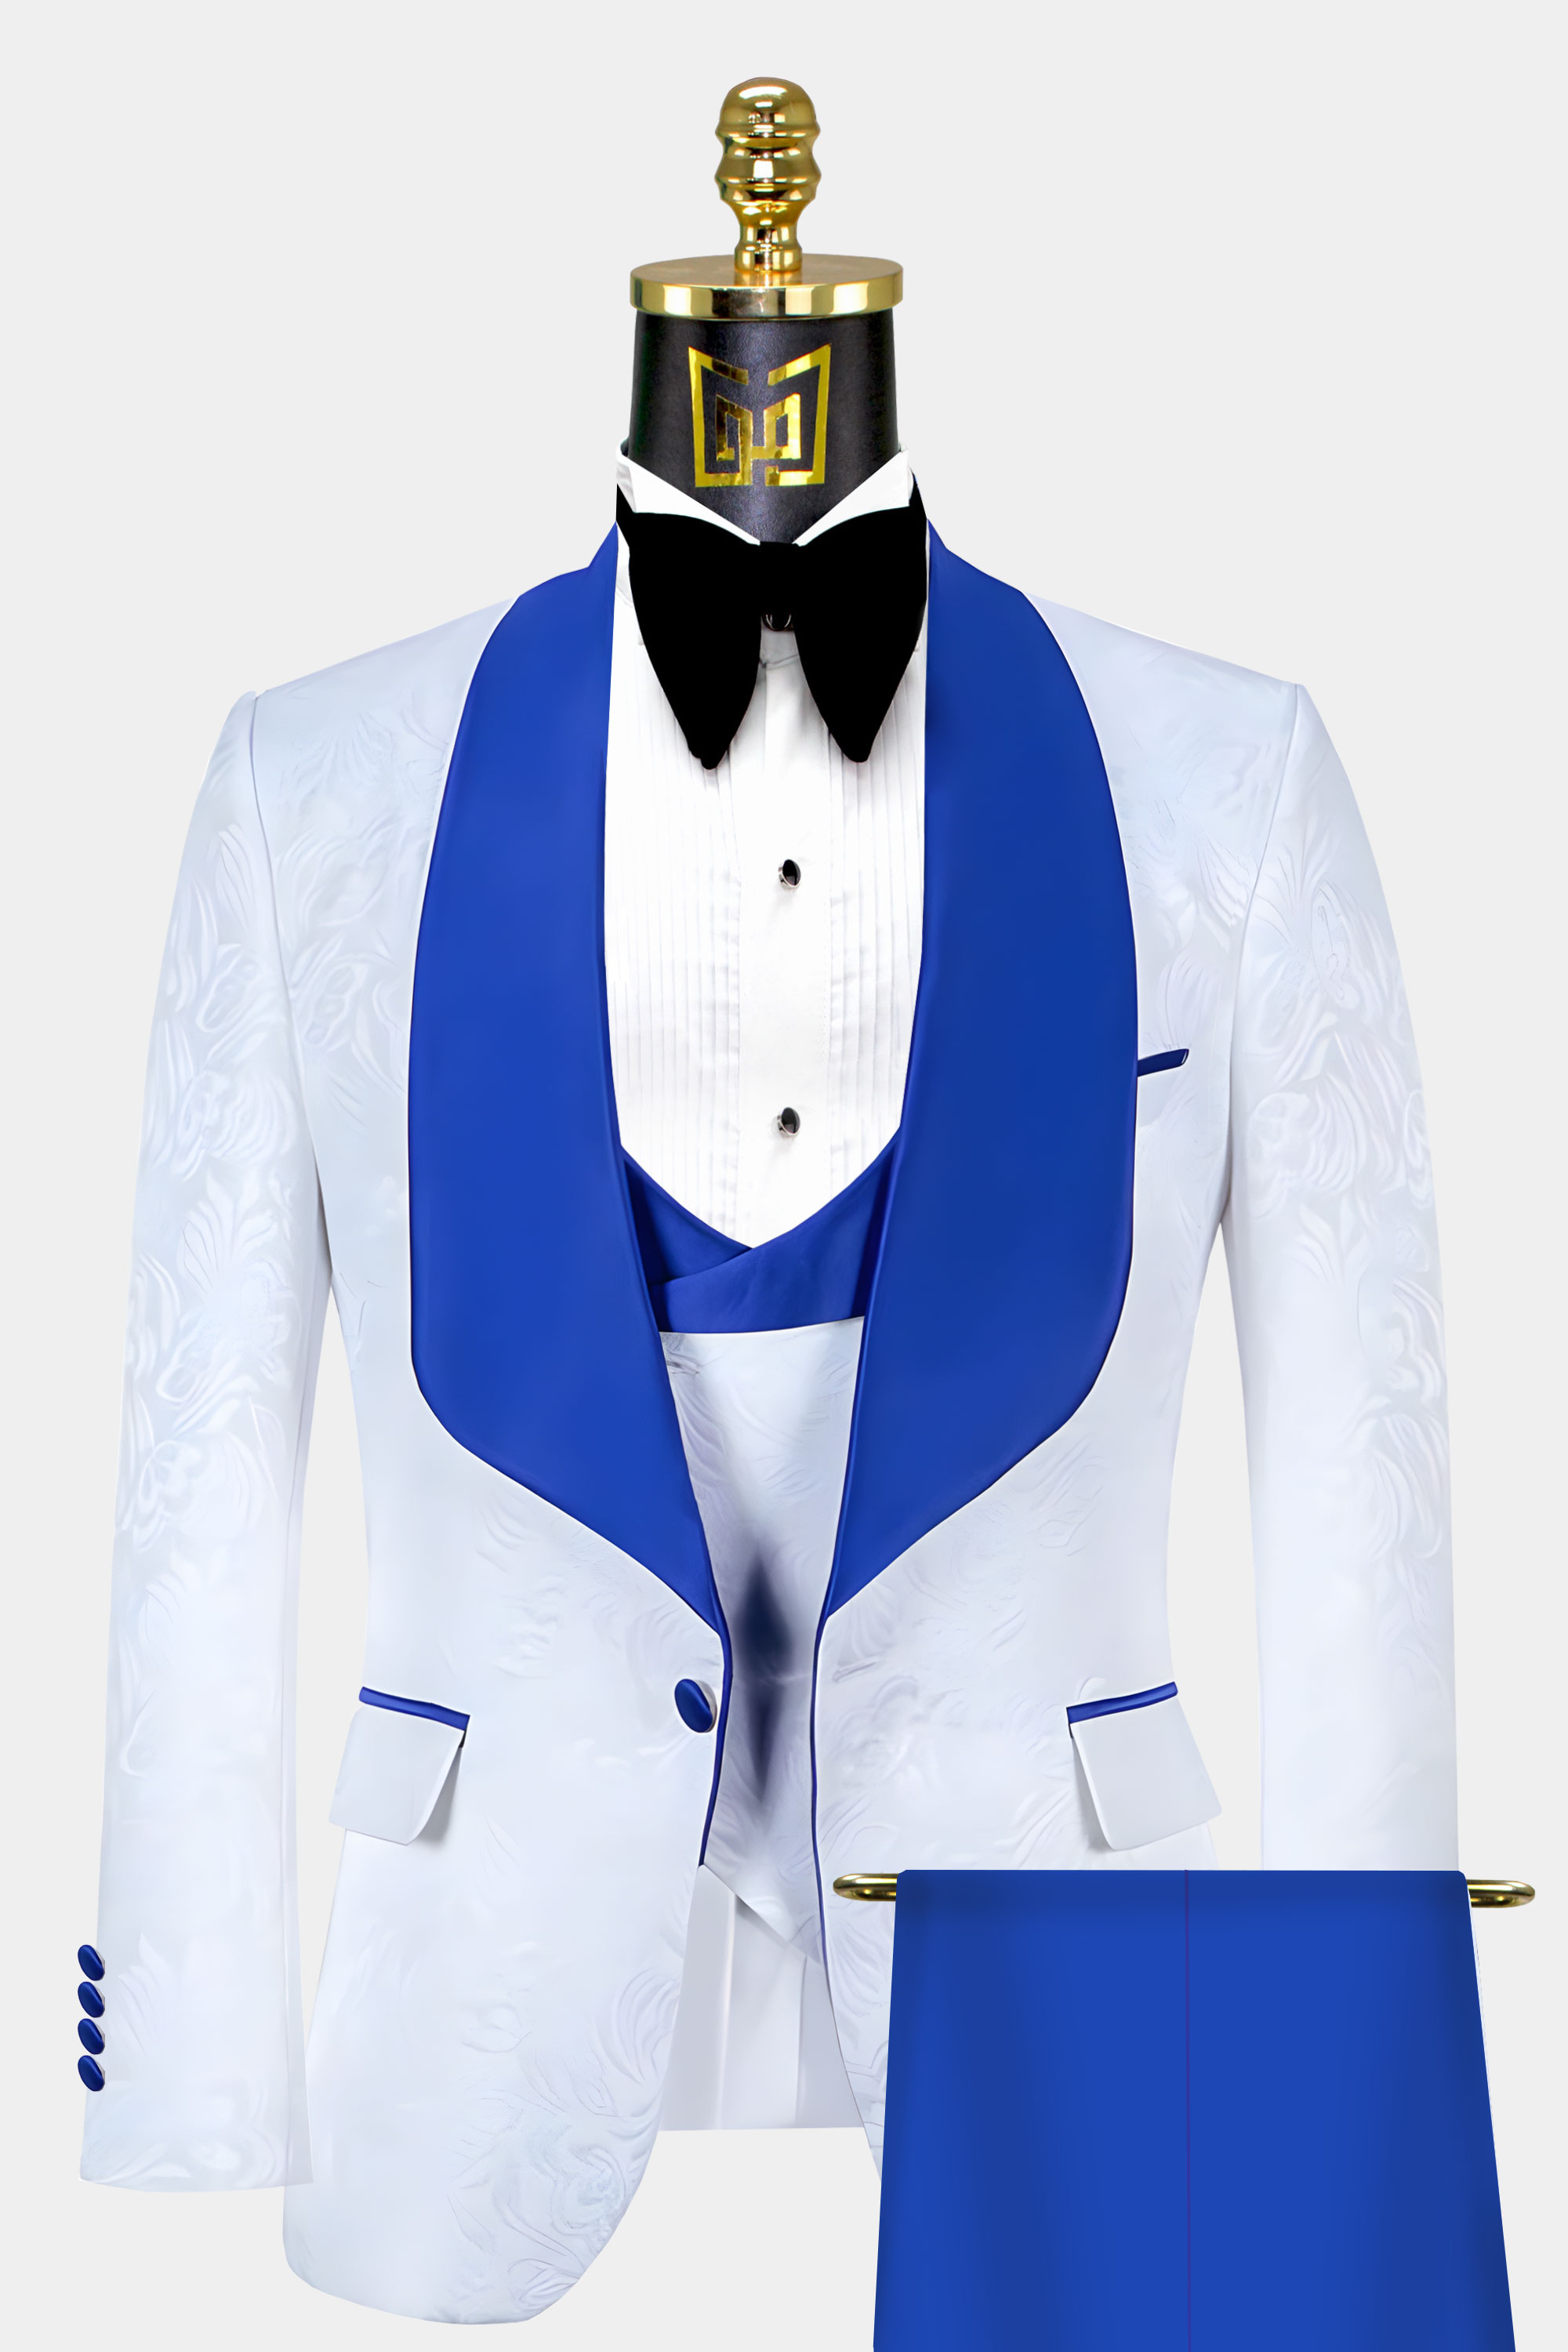 Royal-Blue-and-White-Tuxedo-Groom-Wedding-Prom-Suit-from-Gentlemansguru.com